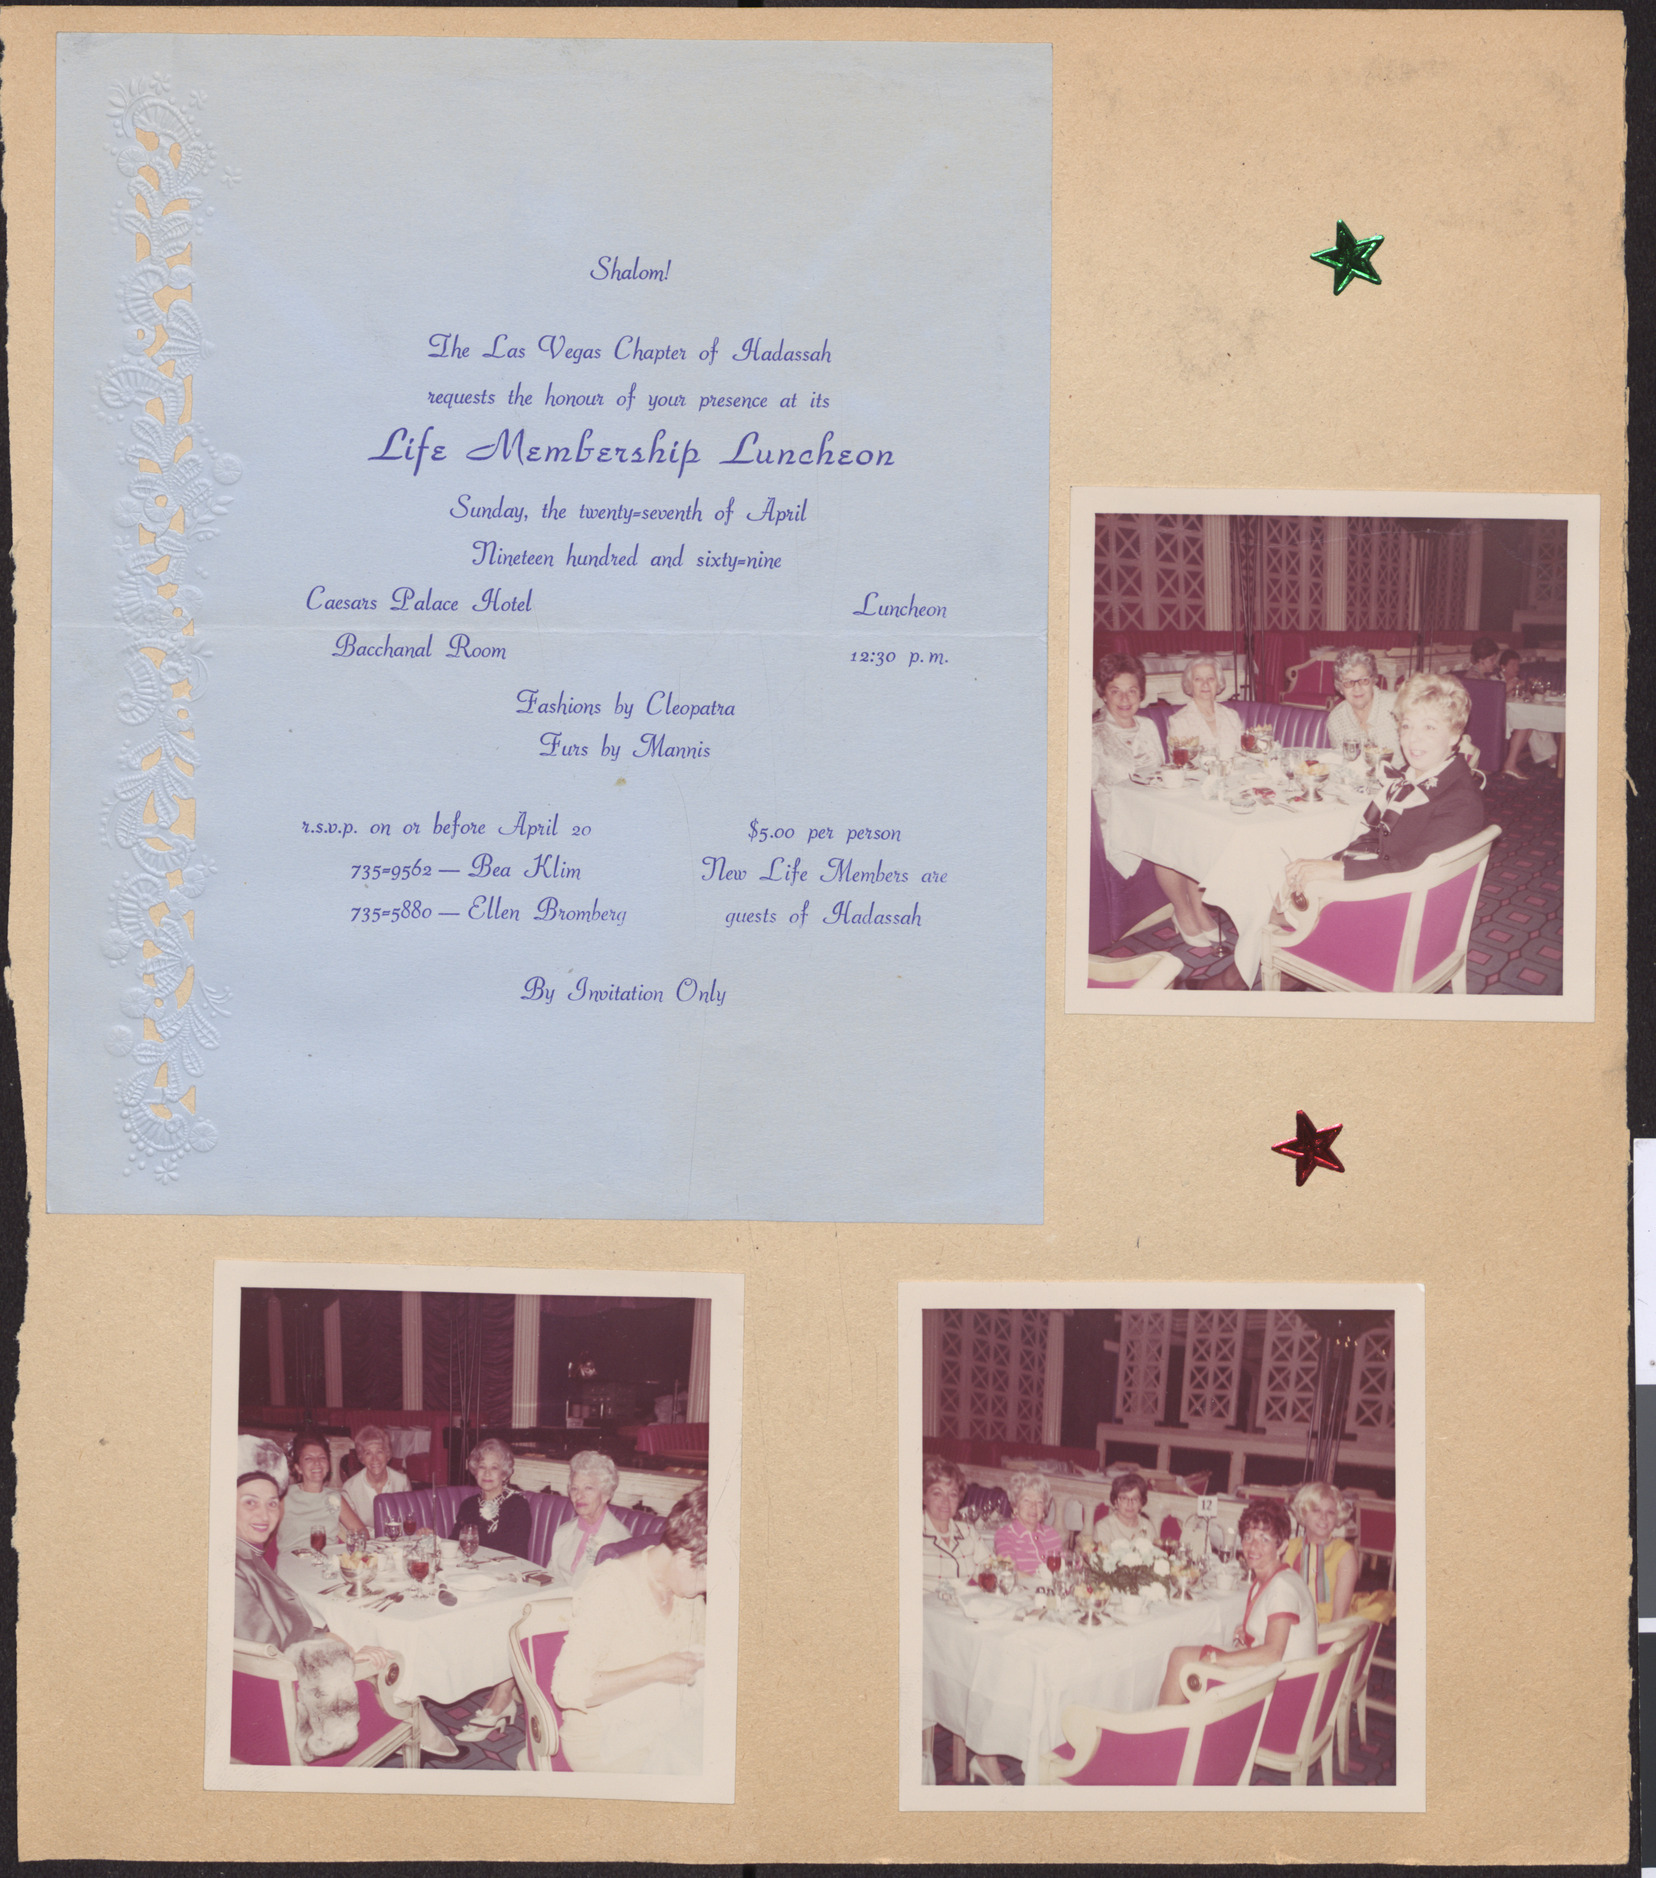 Invitation to Life Membership Luncheon, April 27, 1969, and photographs of Hadassah membership luncheon